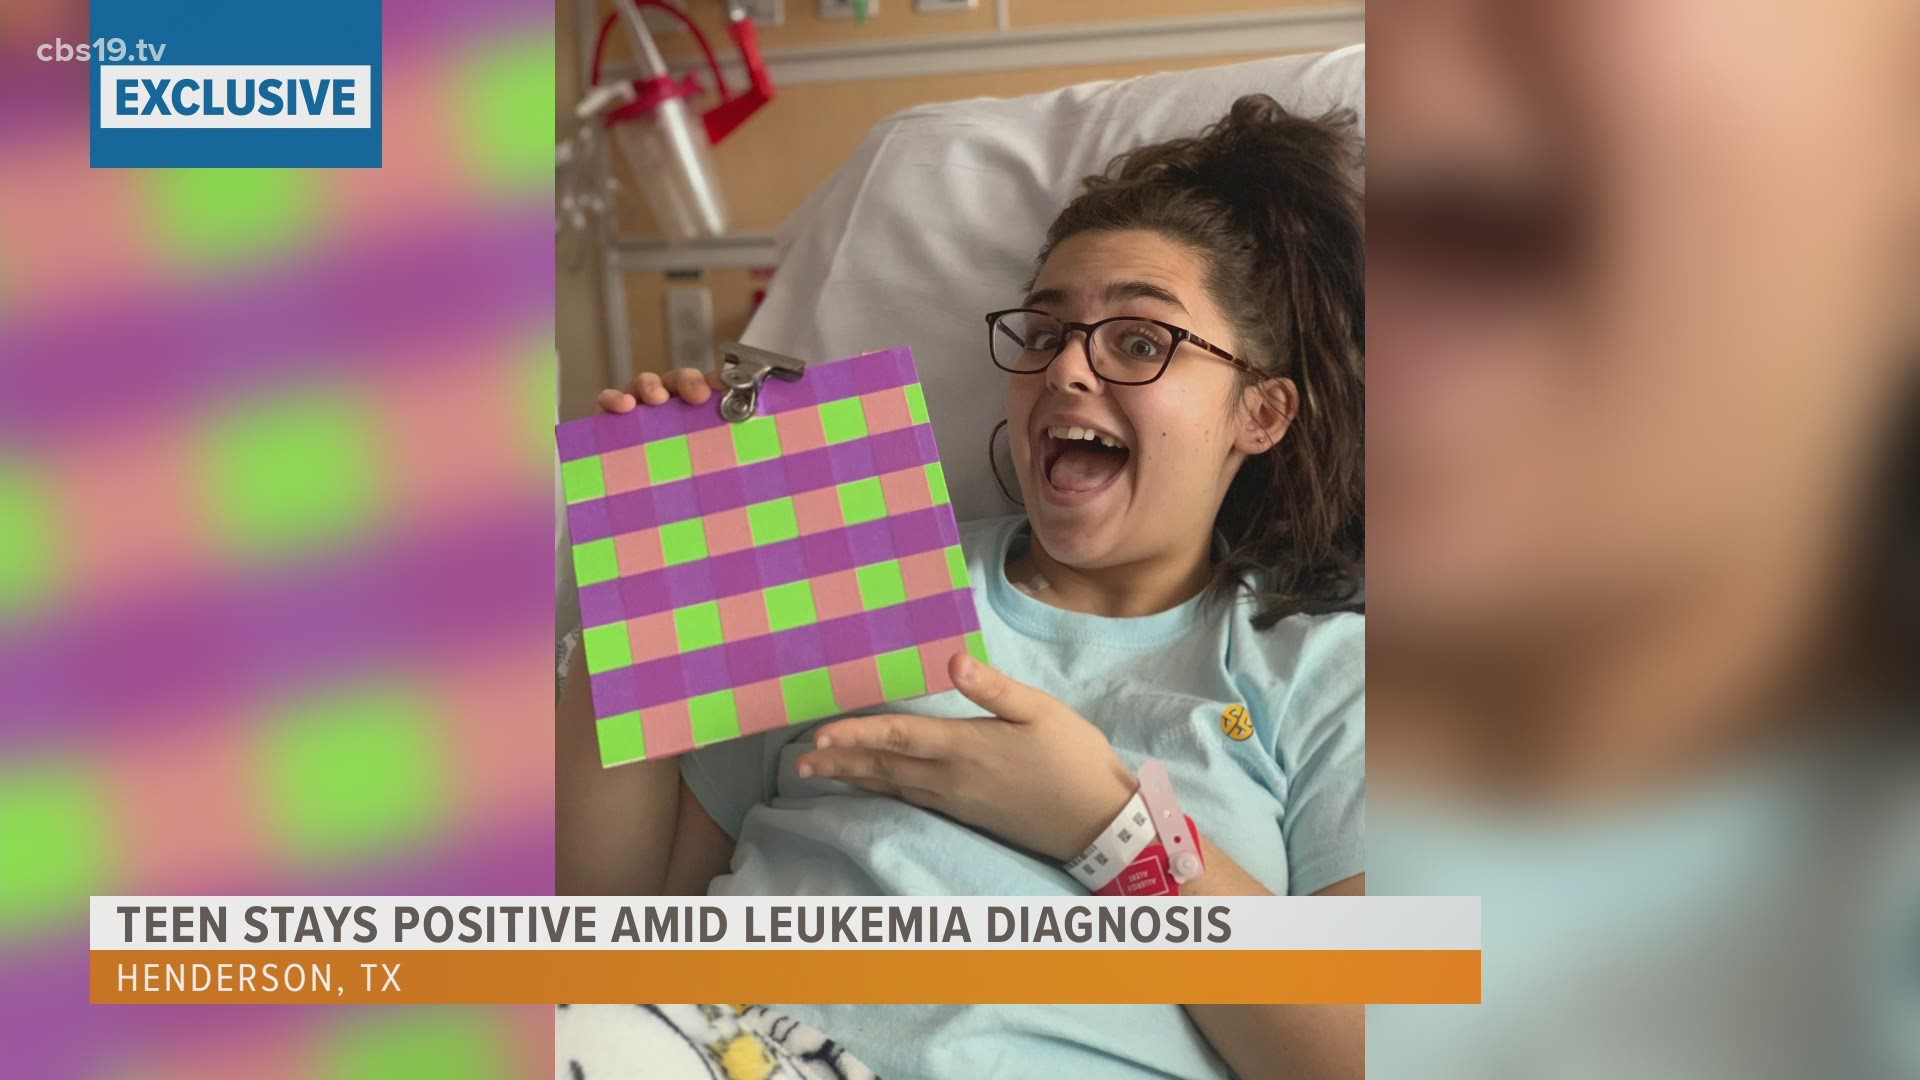 Henderson teen stays positive amid Leukemia diagnosis